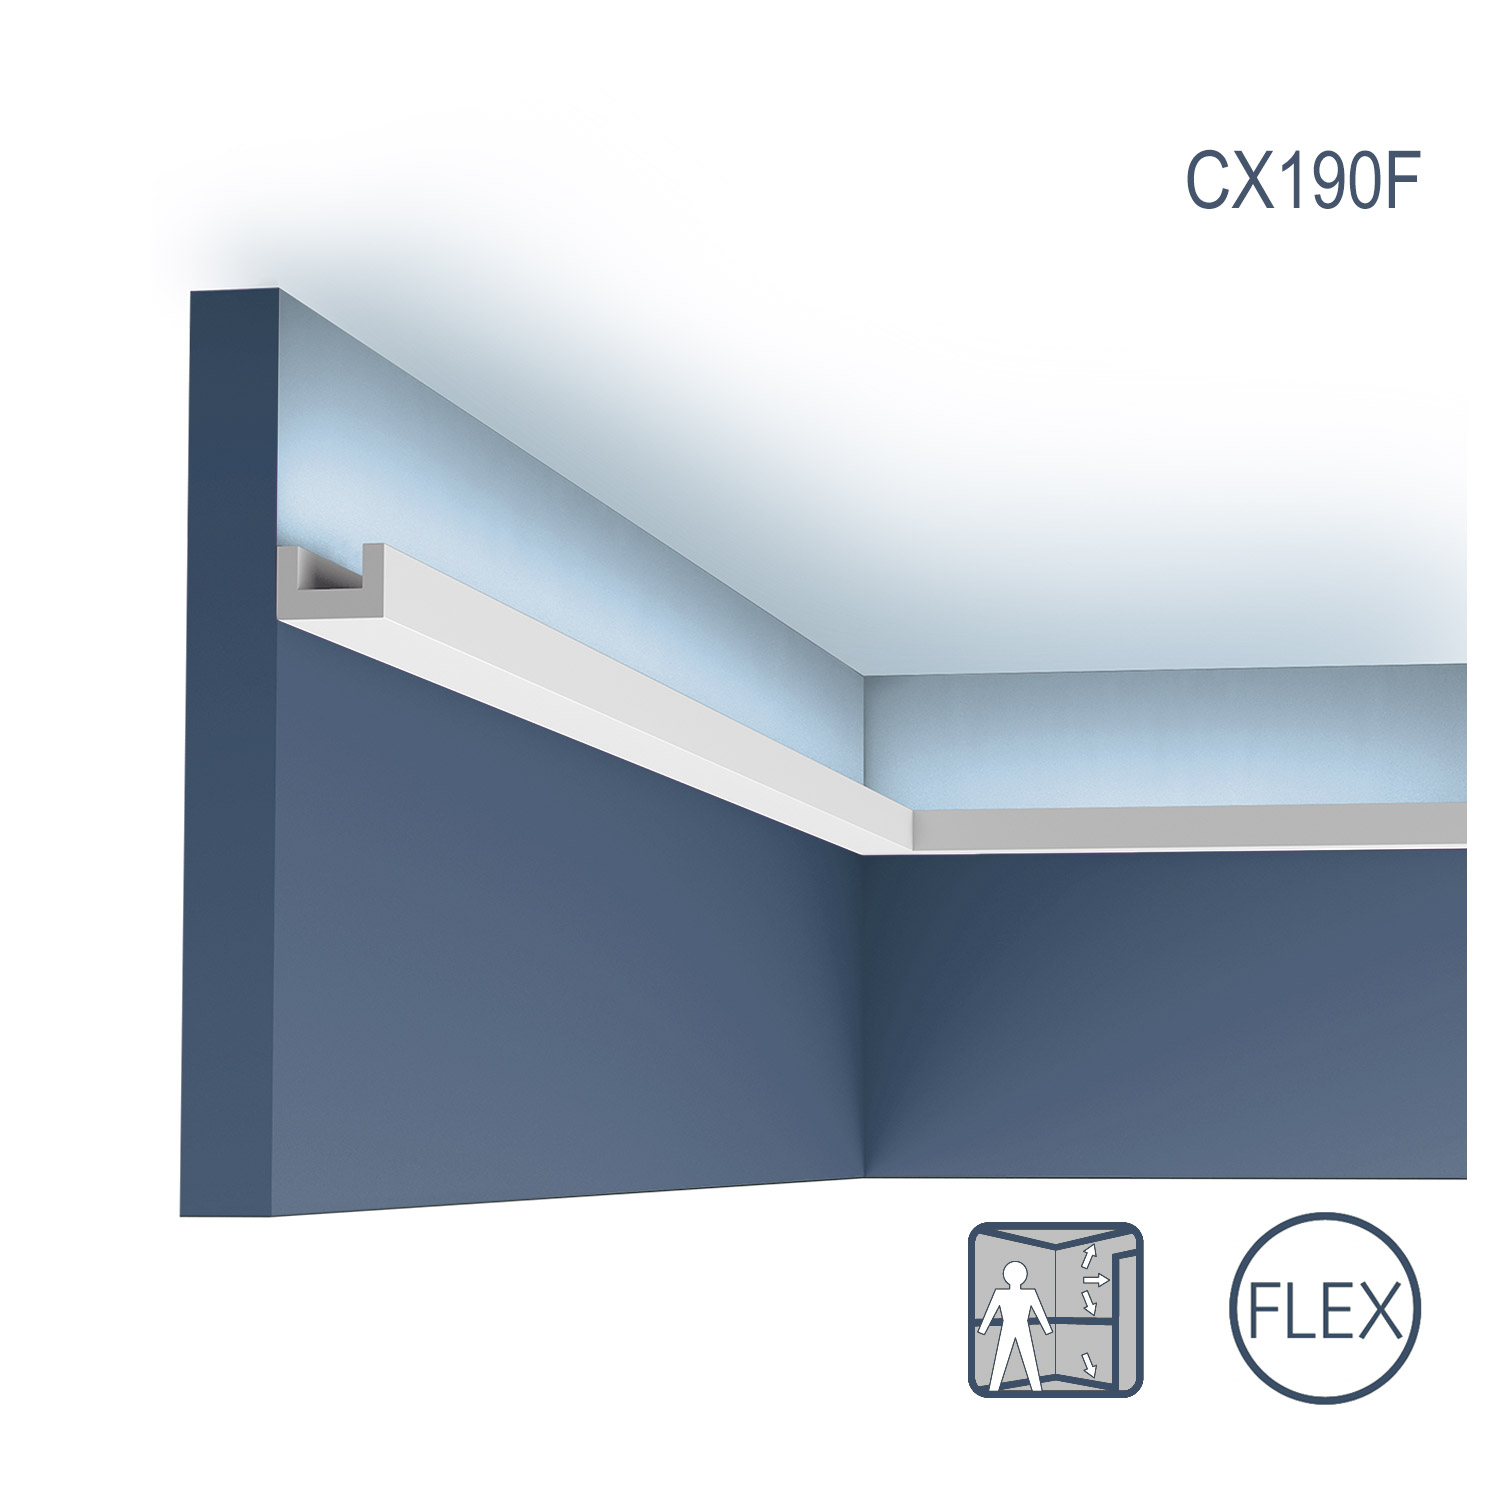 Cornisa Flex Axxent CX190F, Dimensiuni: 200 X 2 X 3 cm, Orac Decor